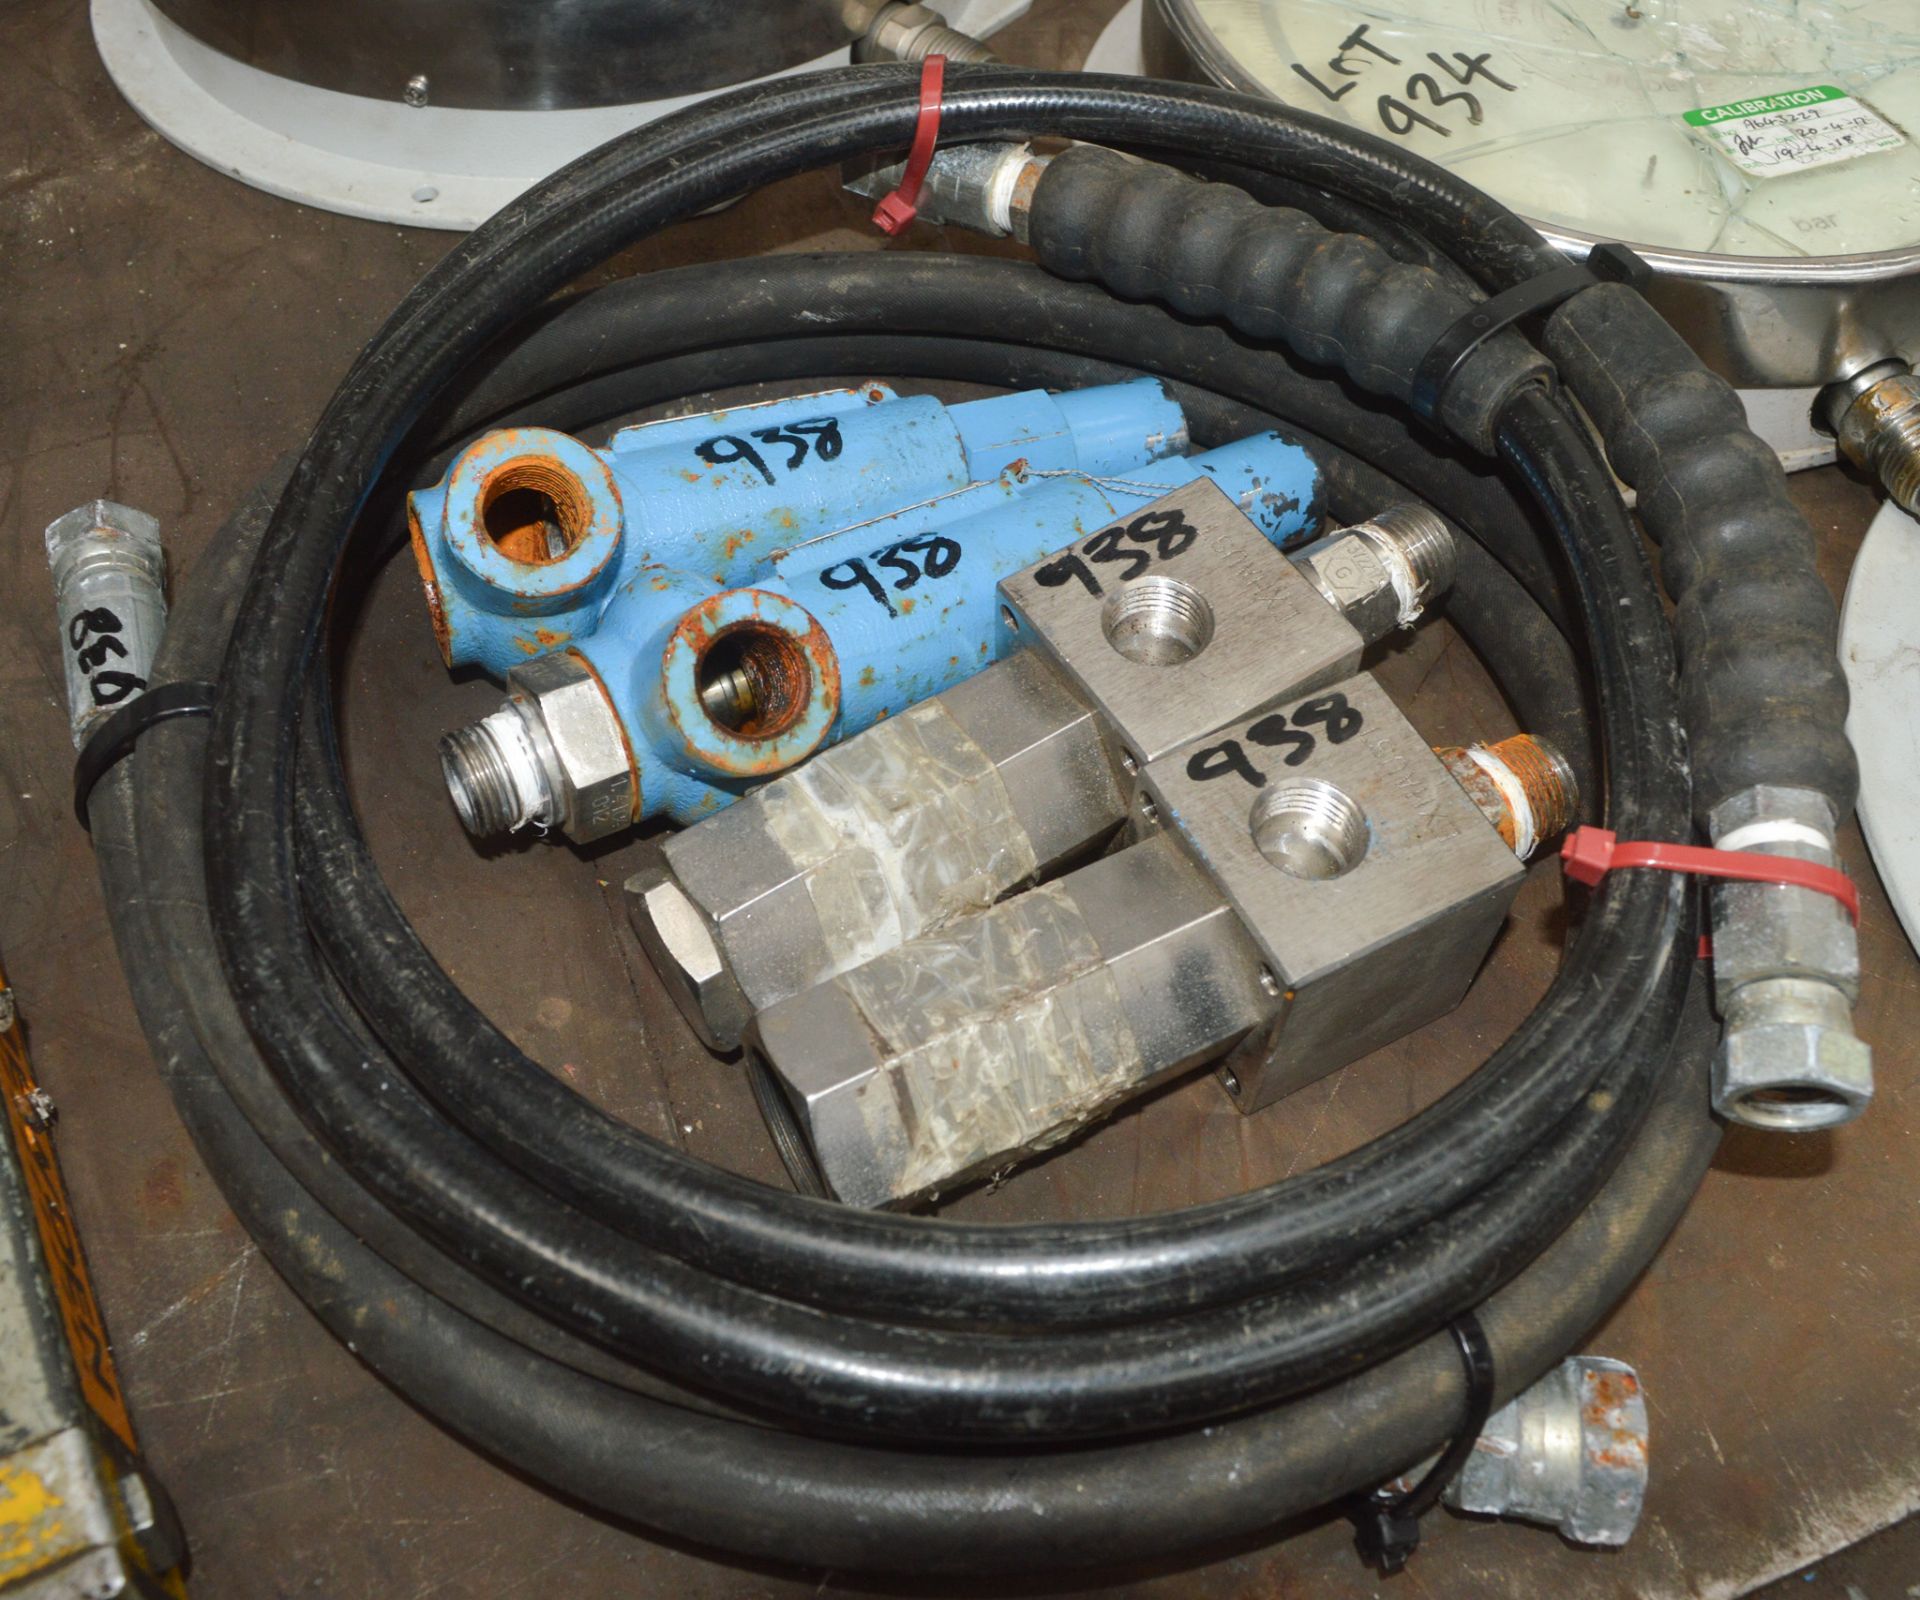 4 hydraulic valves and 2 hoses